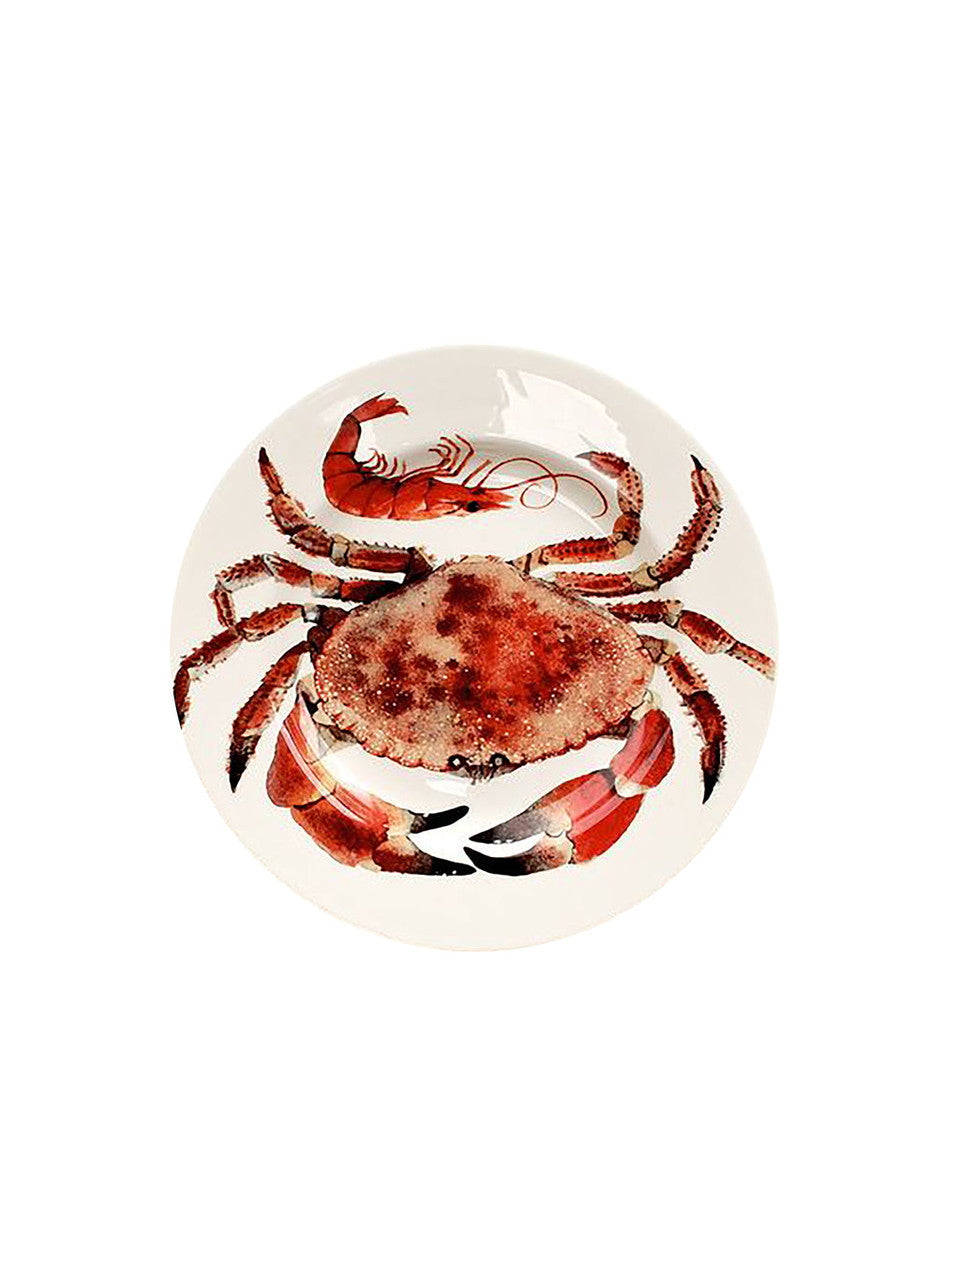 Crab 8 1/2 plate by Emma Bridgewater.